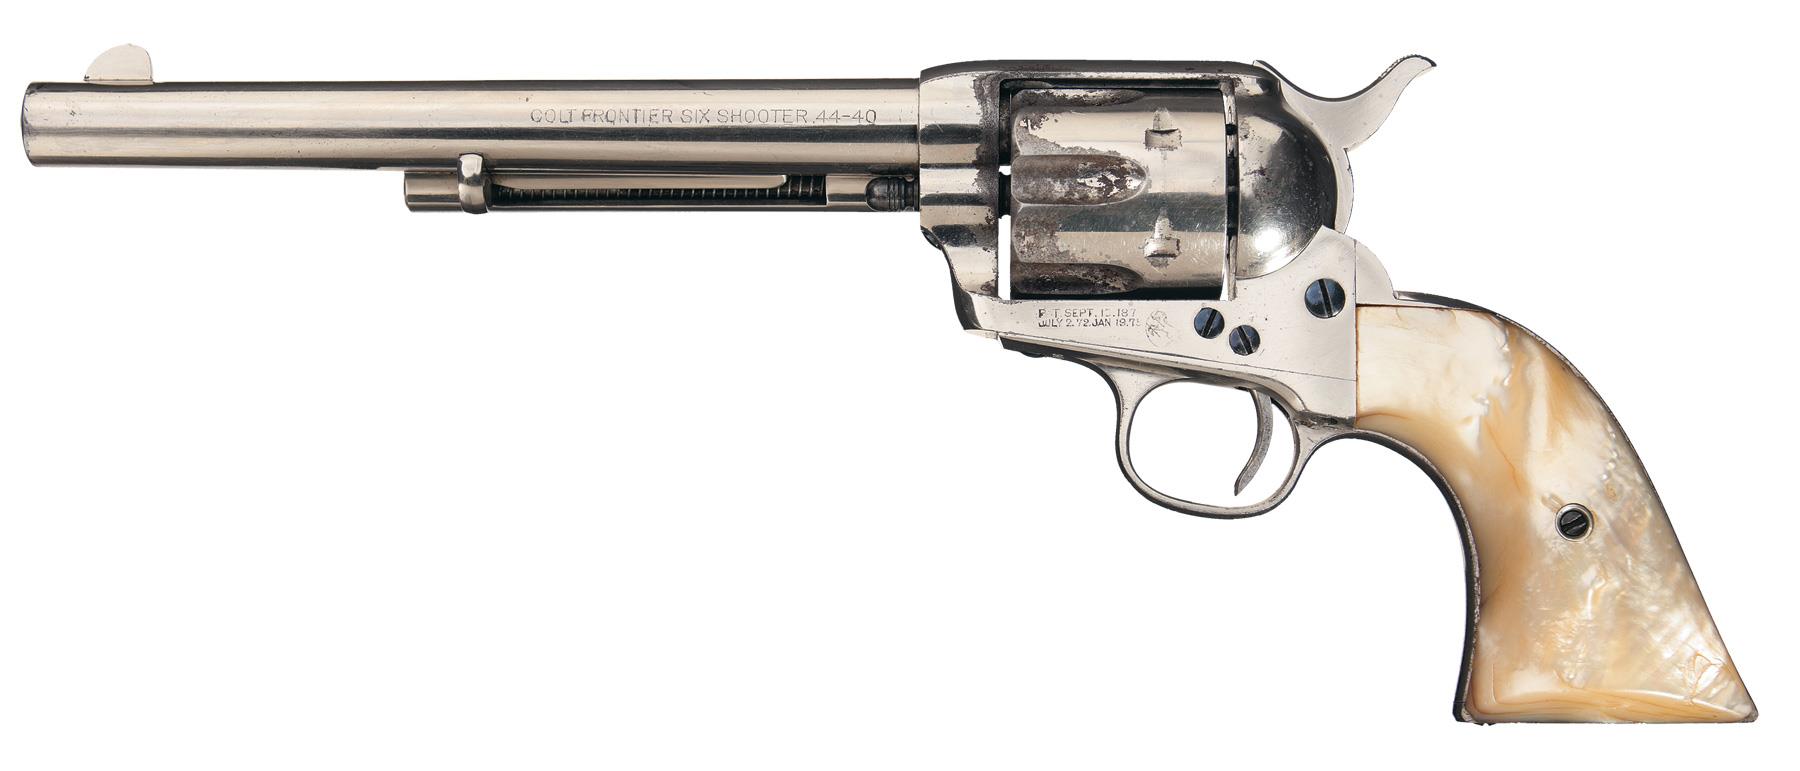 Revolver cowboy incomplet colt frontier 44 mod Crossman S6 cal 4.5